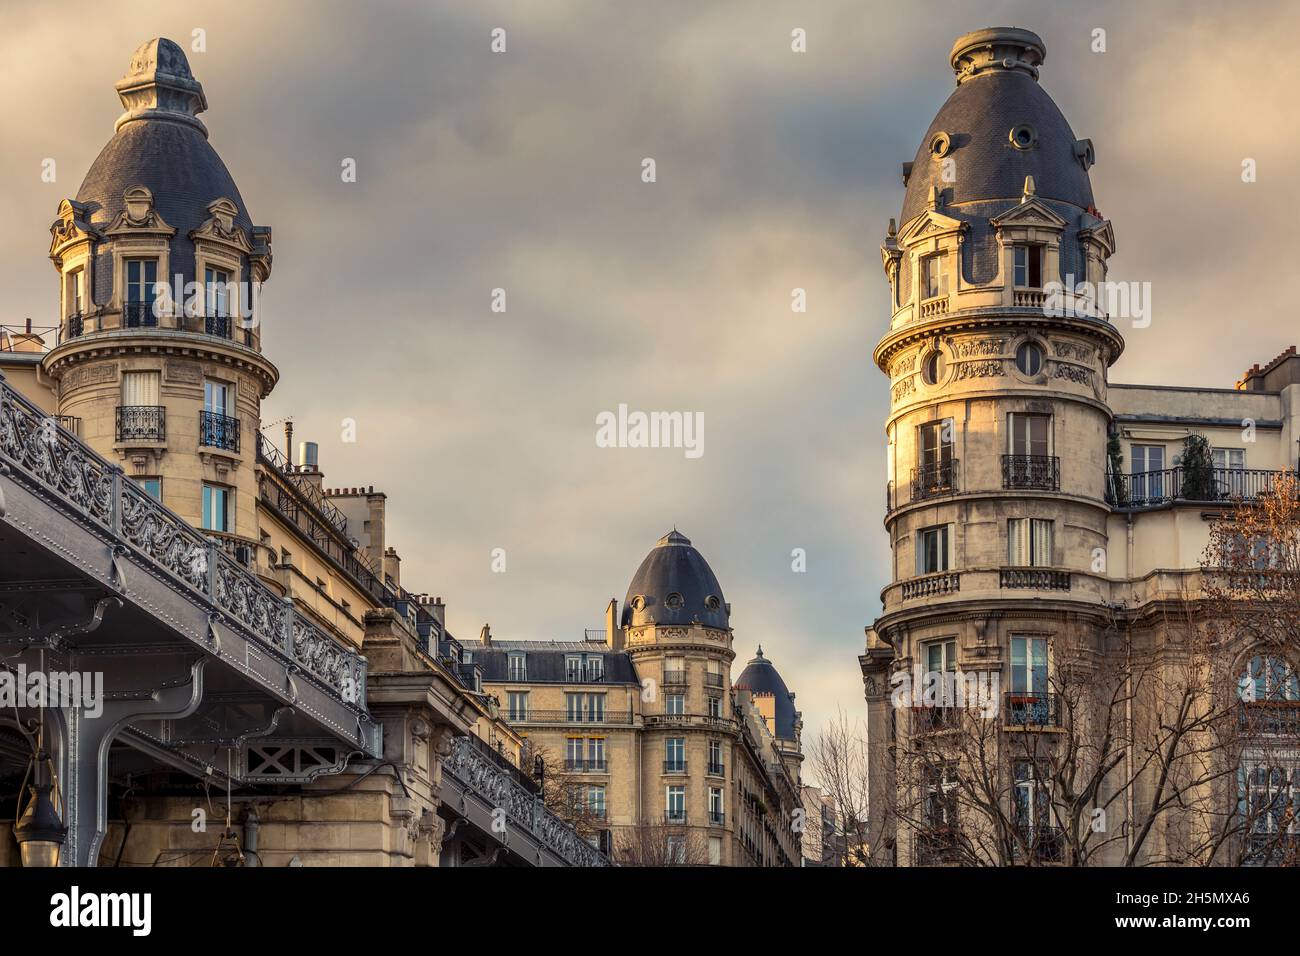 Paris, France - February 4, 2021: View of beautiful Haussmann buildings near Bir Hakeim bridge and Eiffel tower in Paris Stock Photo